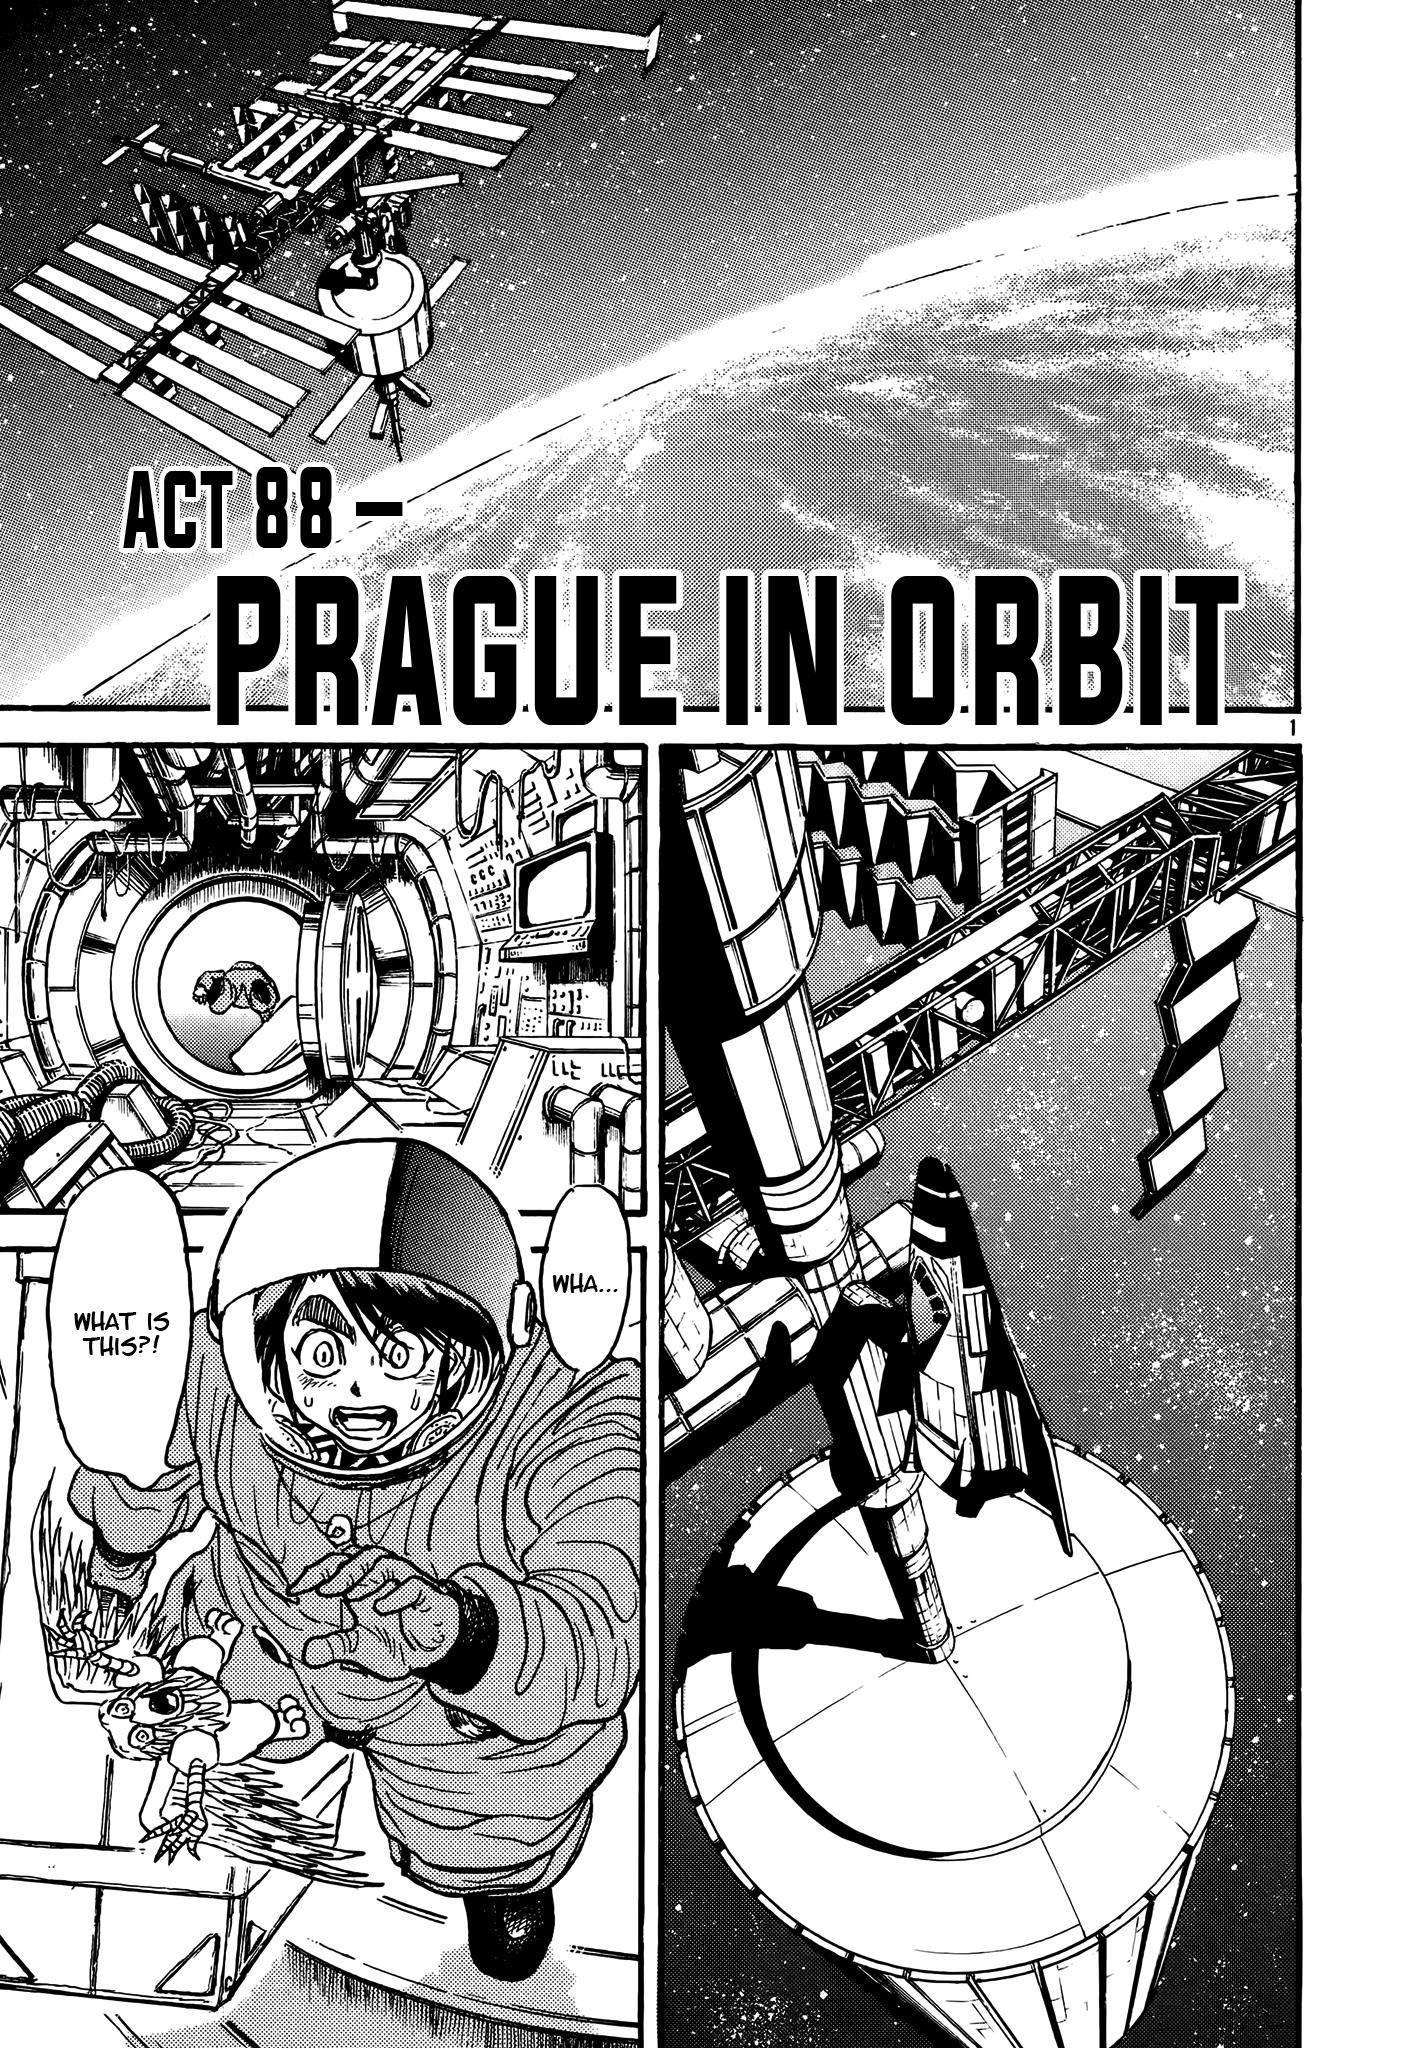 Karakuri Circus Vol.43 Chapter 421: Deus Ex Machina - Act 88 - Prague In Orbit - Picture 1